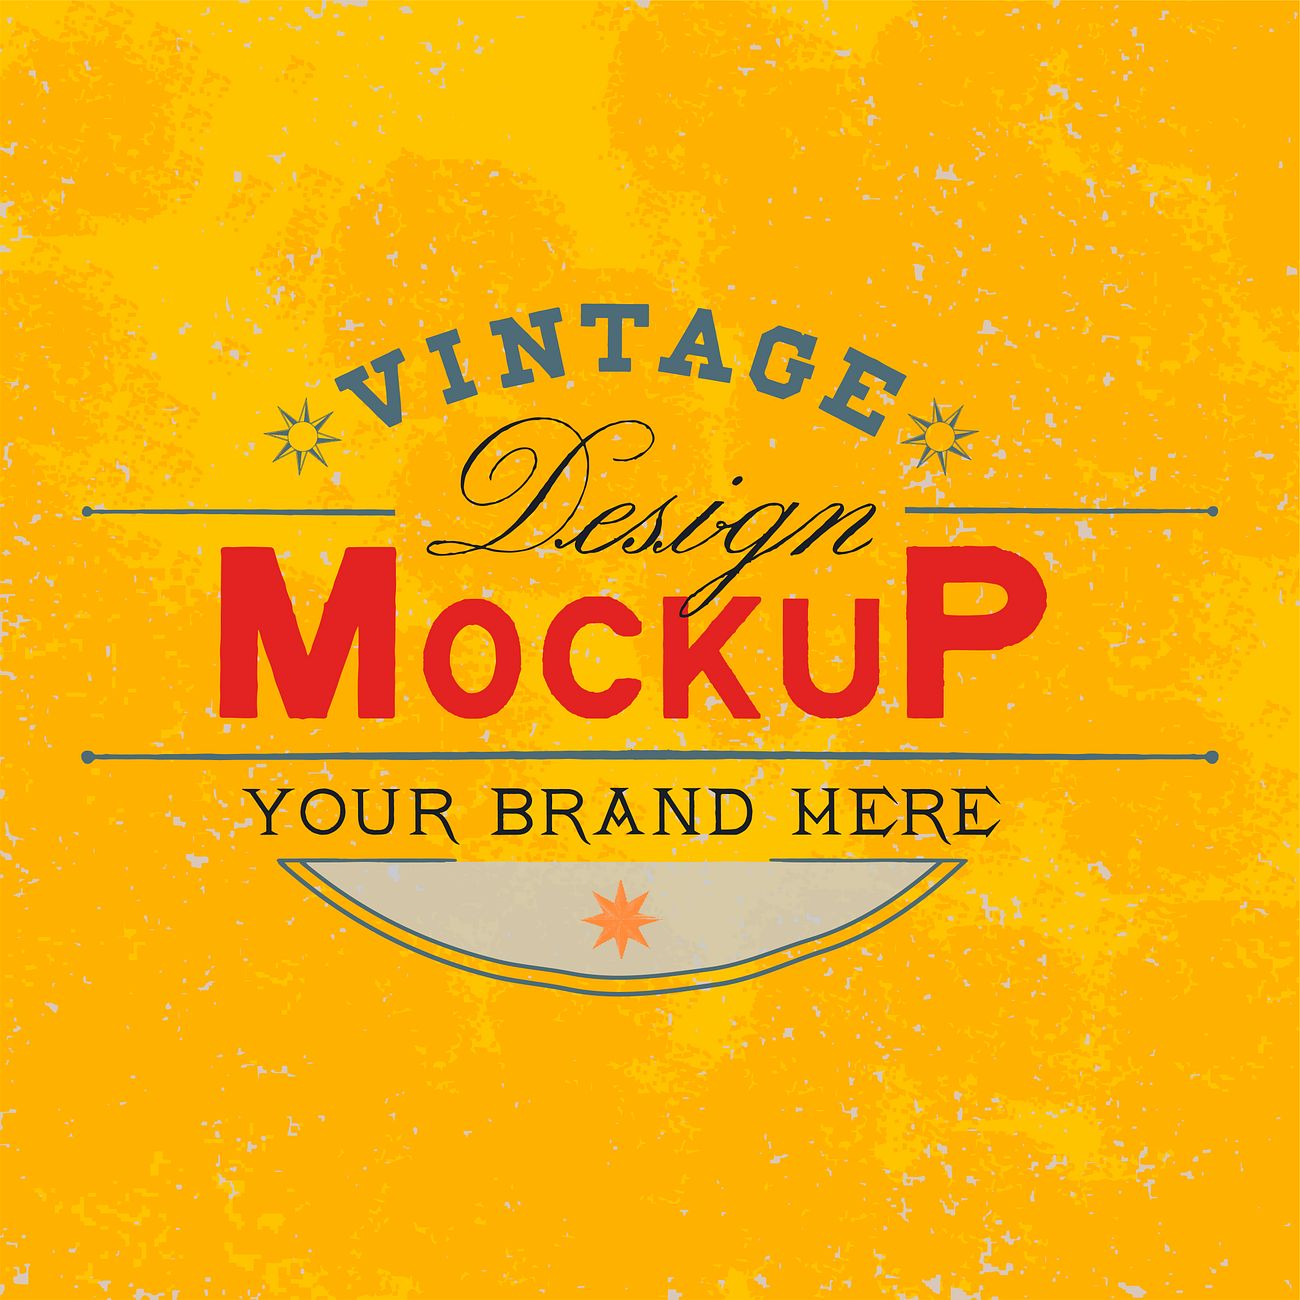 Download Vintage mockup logo design vector | Free vector - 463589